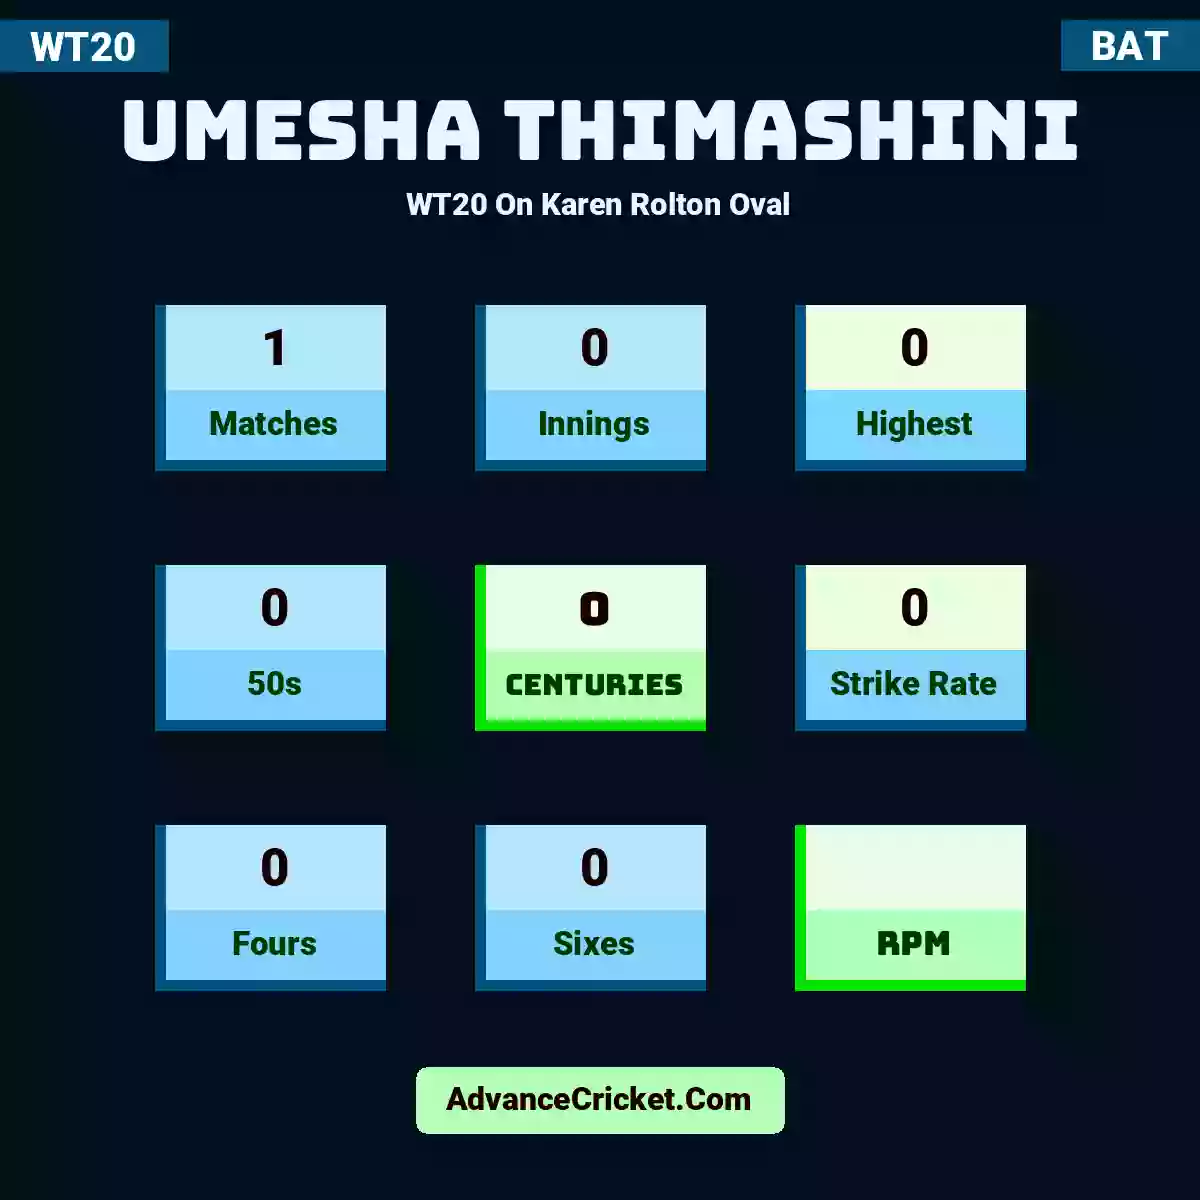 Umesha Thimashini WT20  On Karen Rolton Oval, Umesha Thimashini played 1 matches, scored 0 runs as highest, 0 half-centuries, and 0 centuries, with a strike rate of 0. U.Thimashini hit 0 fours and 0 sixes.